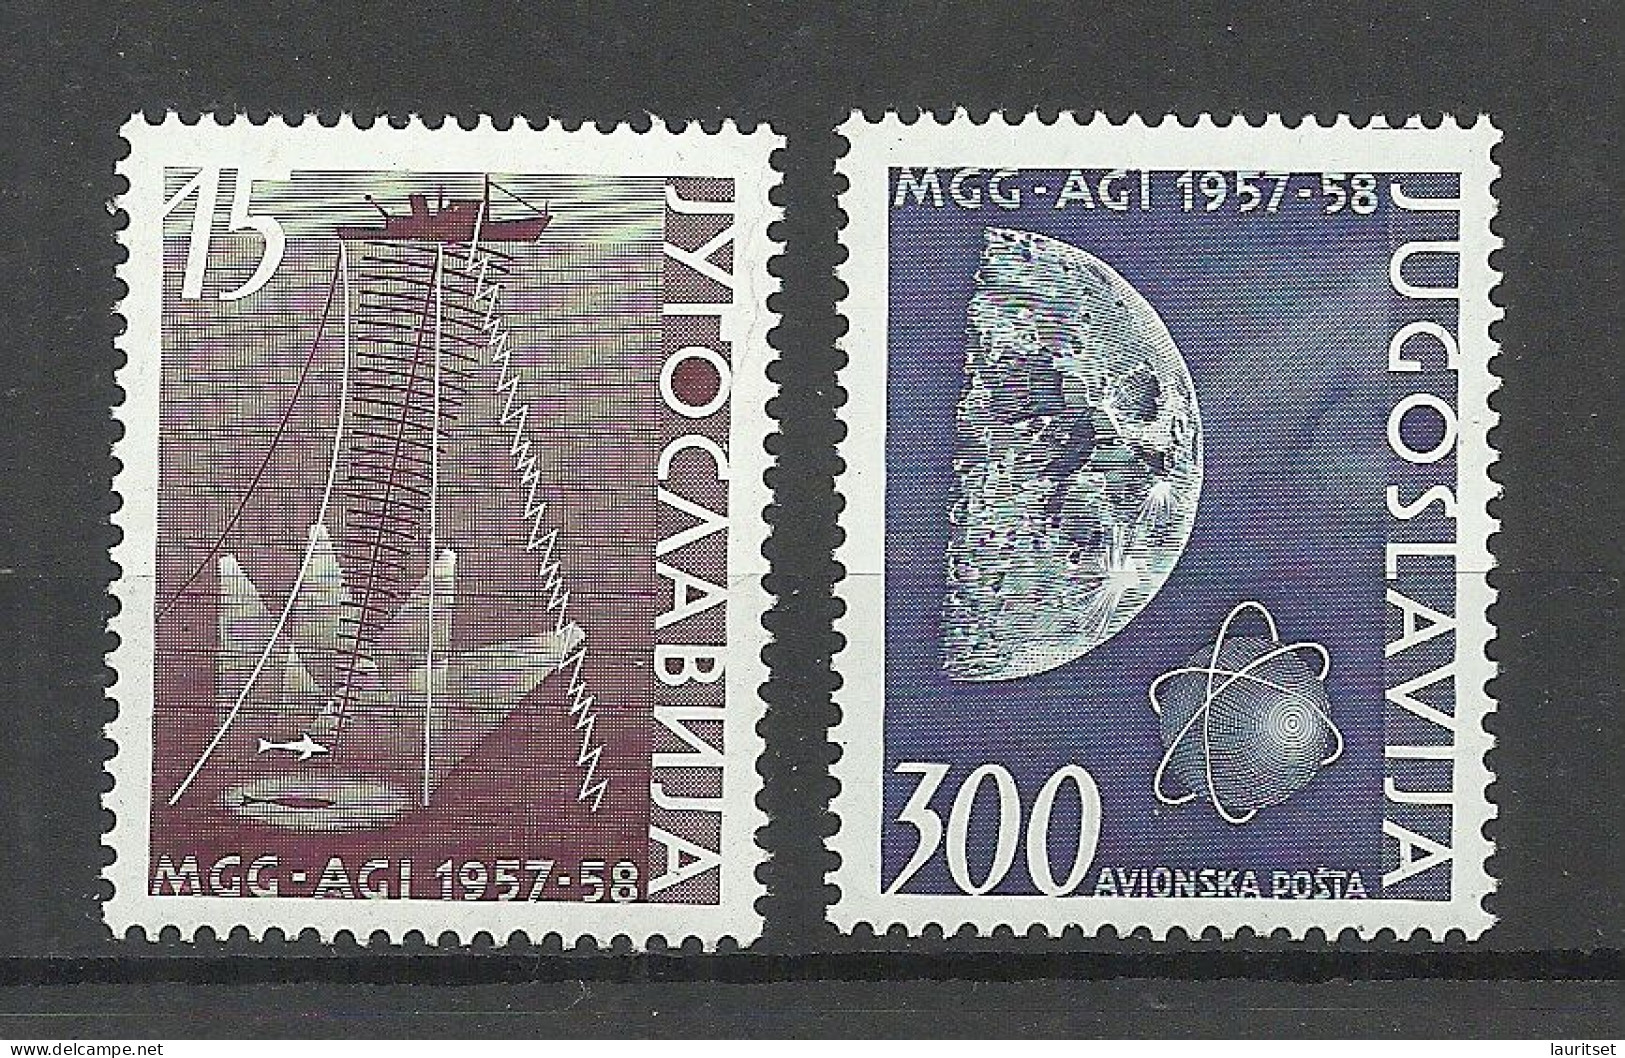 JUGOSLAVIA Jugoslawien 1958 Michel 868 - 869 MNH - Ungebraucht